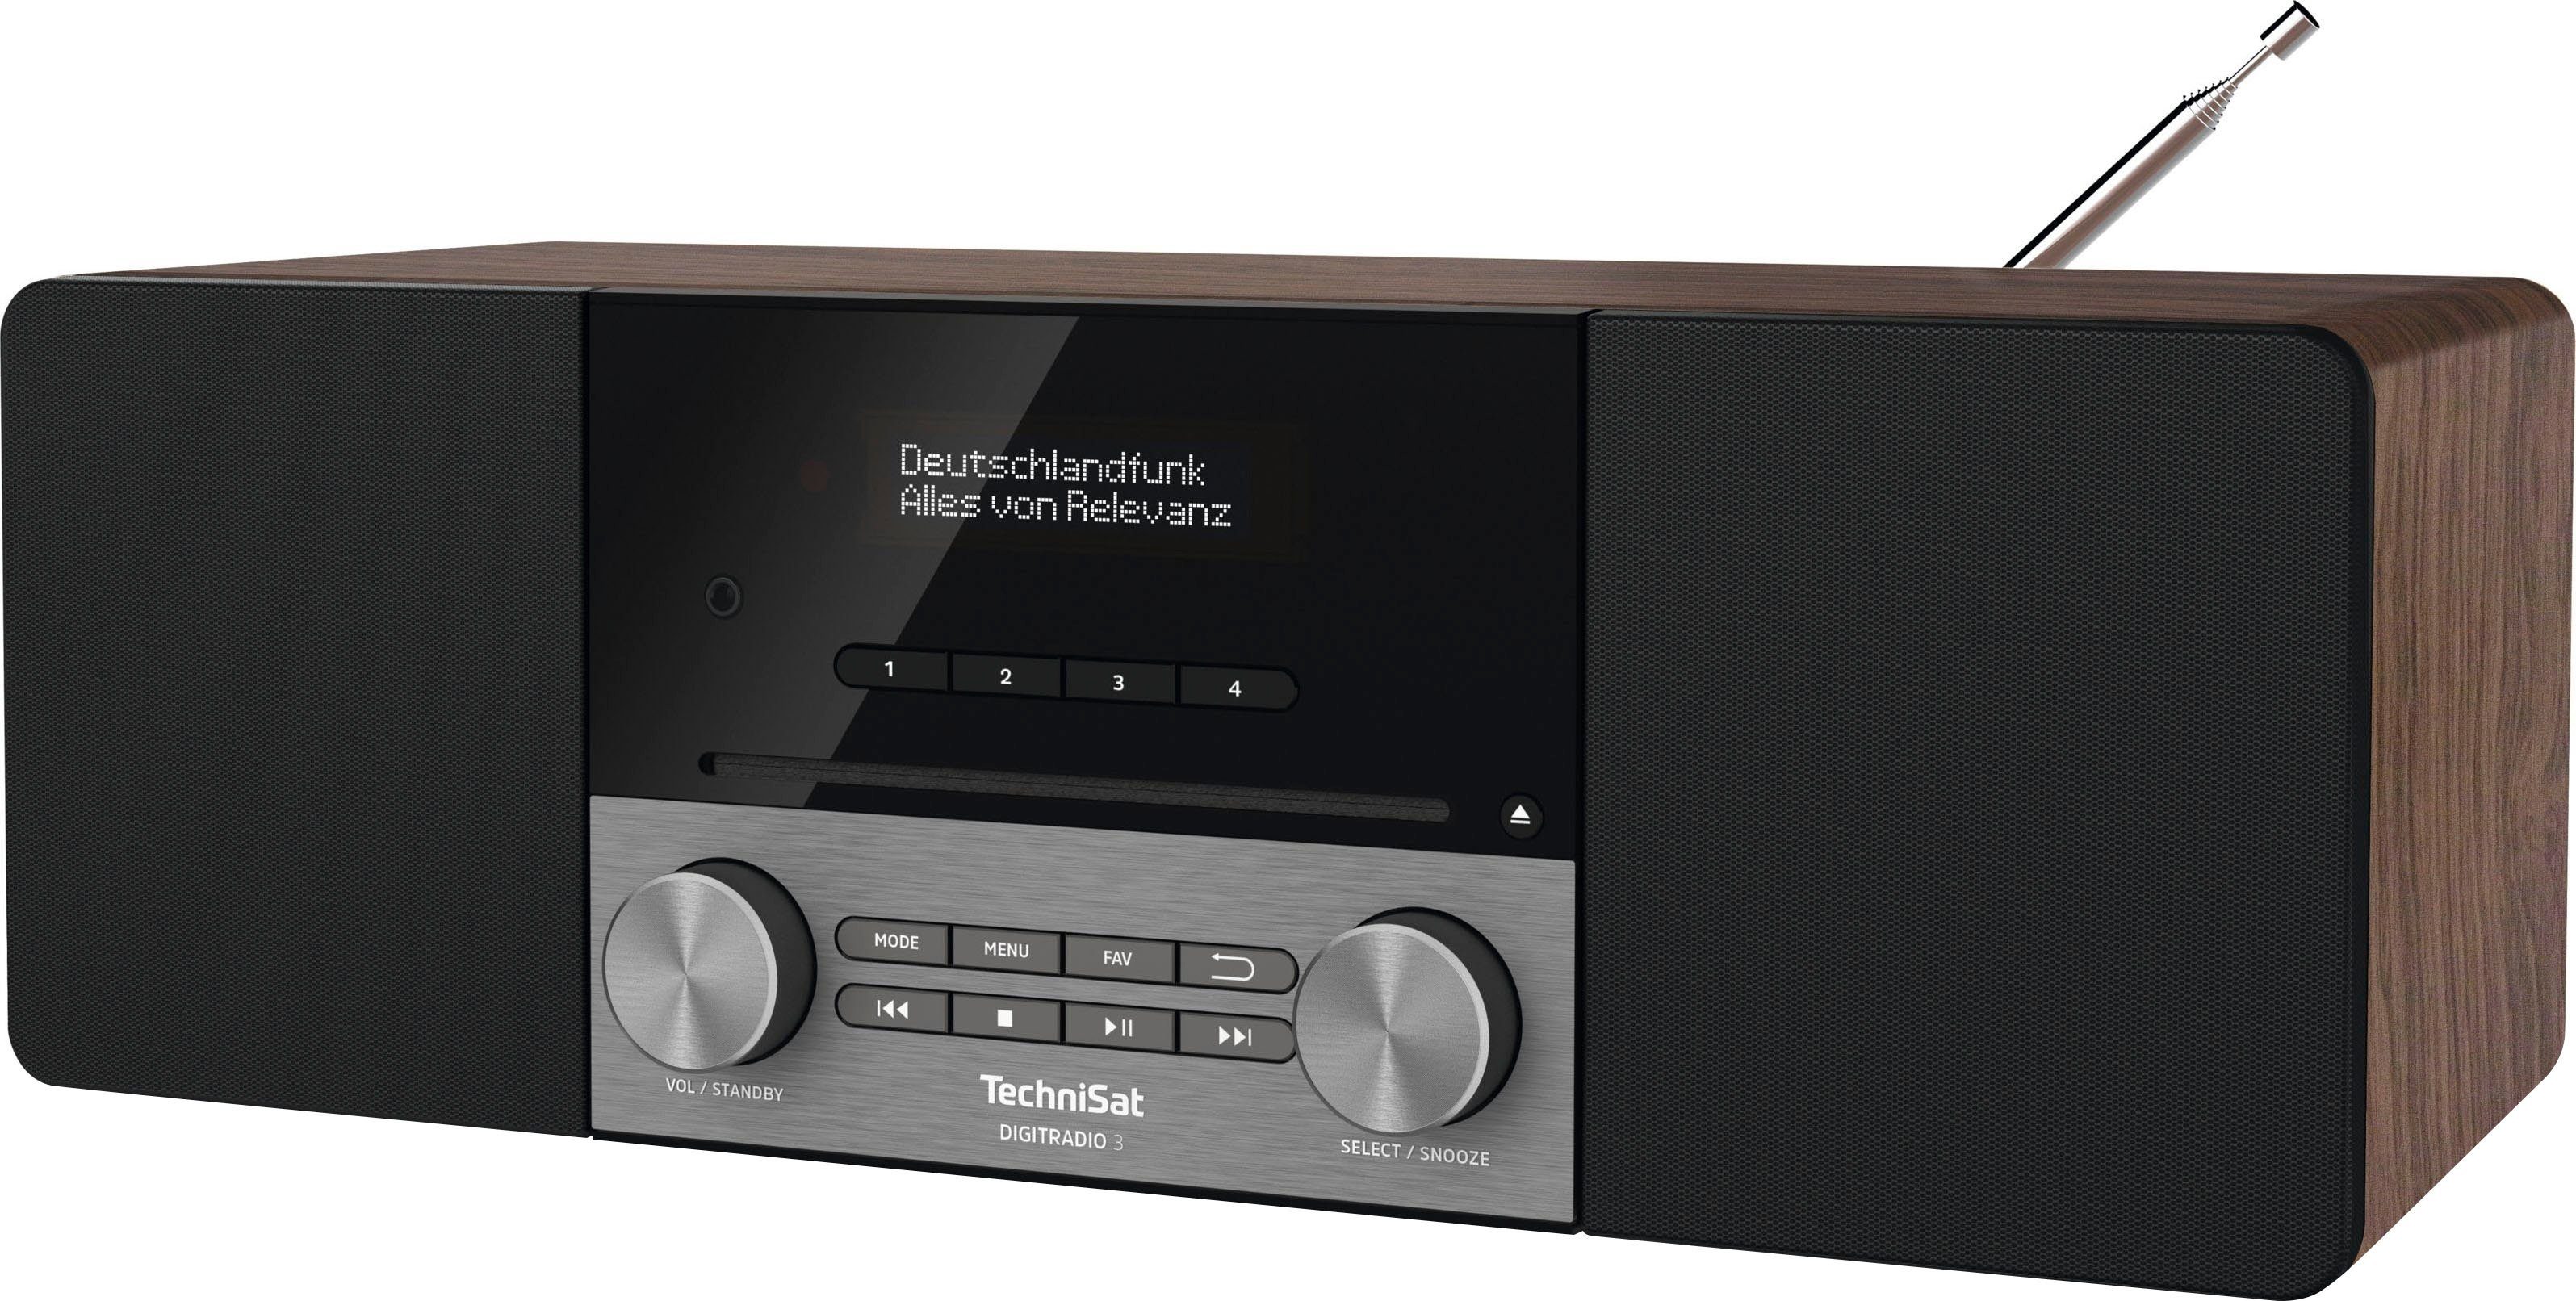 Germany) DIGITRADIO Nussbaum (DAB), Digitalradio Made (DAB) TechniSat RDS, (Digitalradio UKW mit W, 3 in 20 CD-Player,